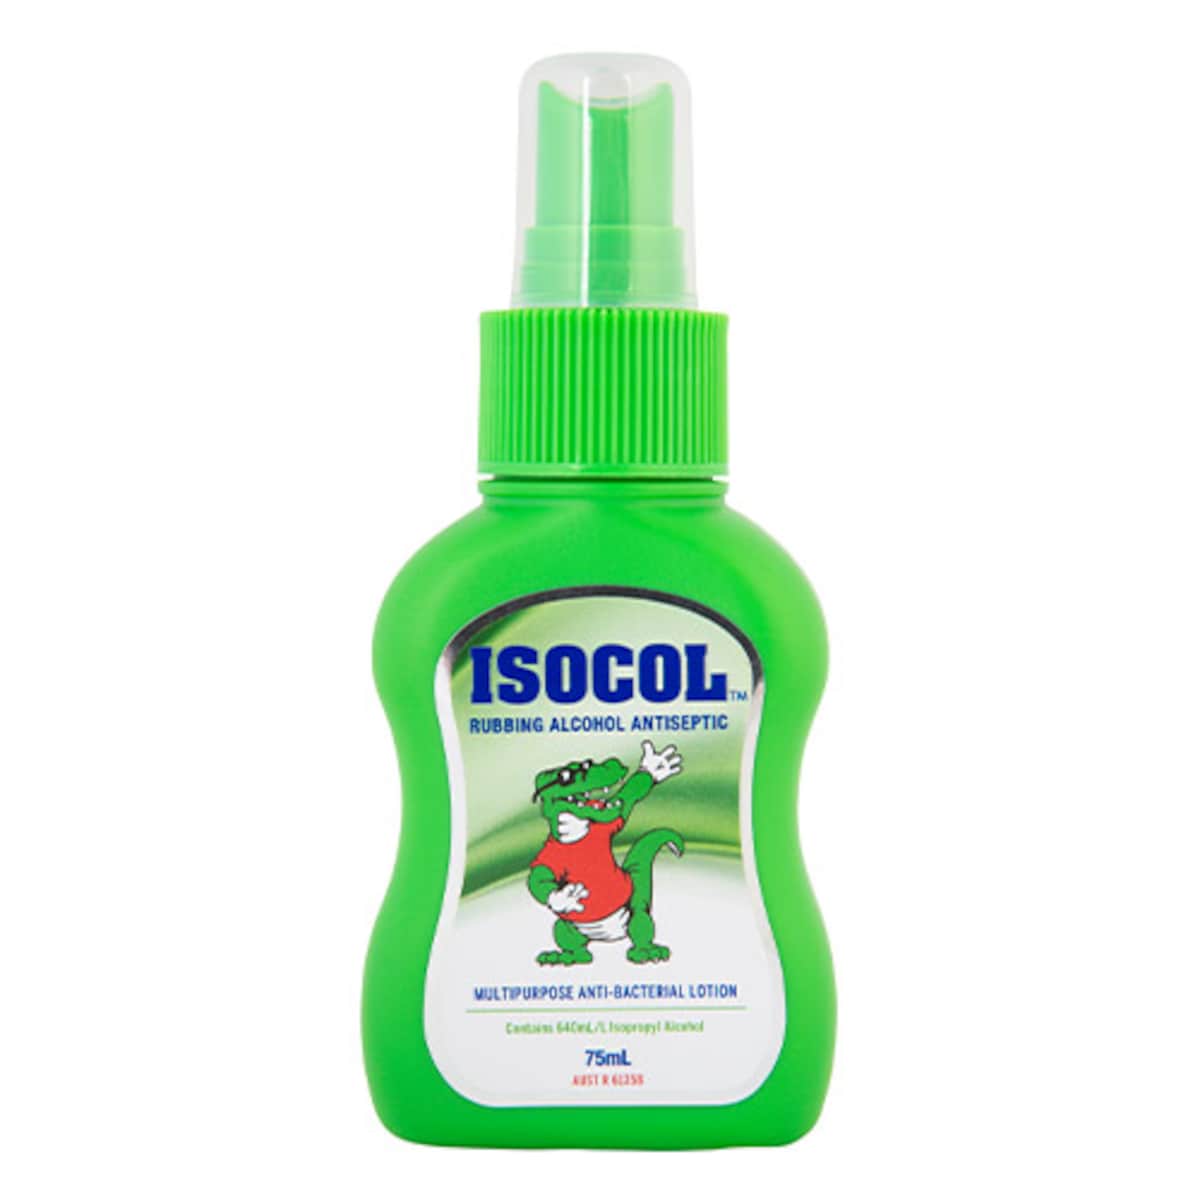 Isocol Antiseptic Rubbing Alcohol Spray 75mL